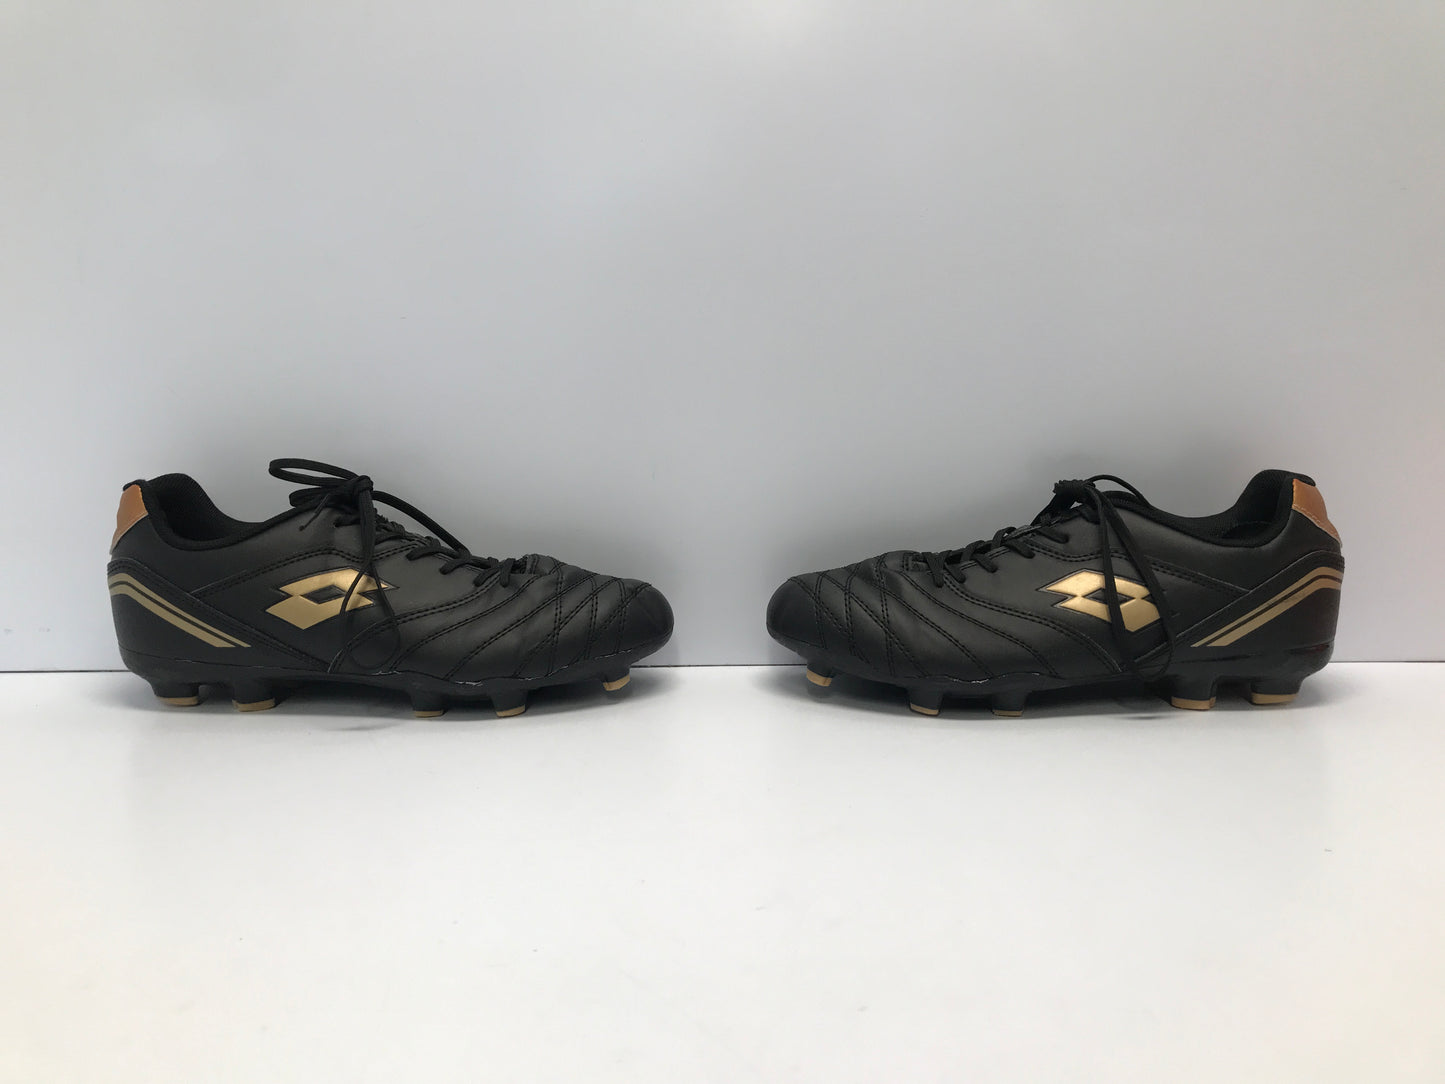 Soccer Shoes Cleats Men's Size 7.5 Lotto Black Gold Excellent